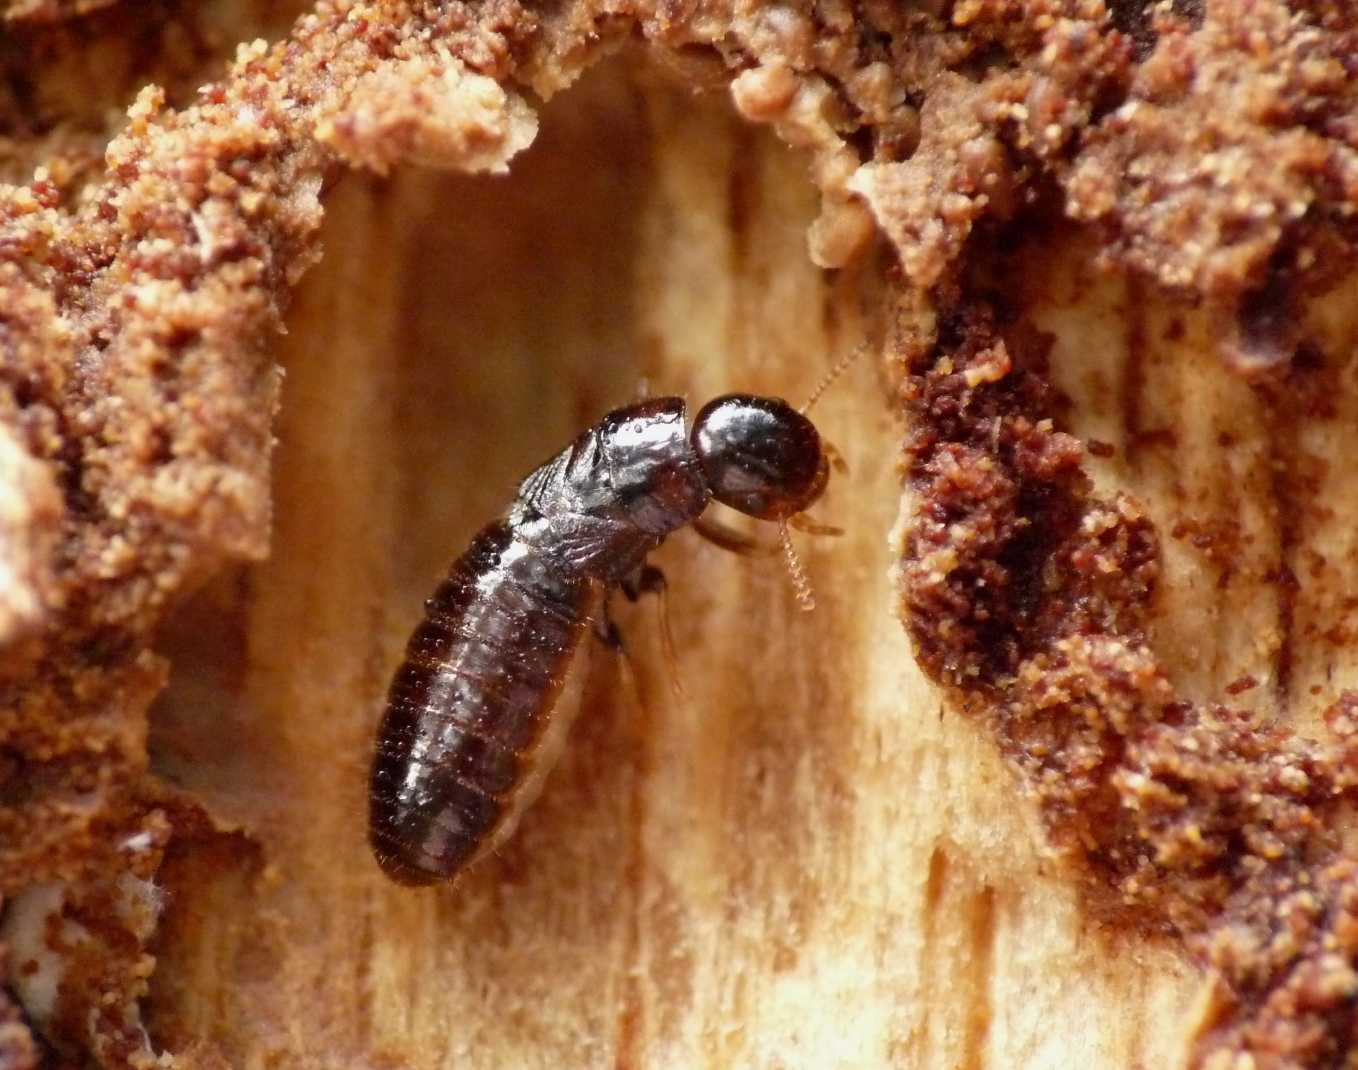 Nursery di termiti: Coppia di Kalotermes flavicollis